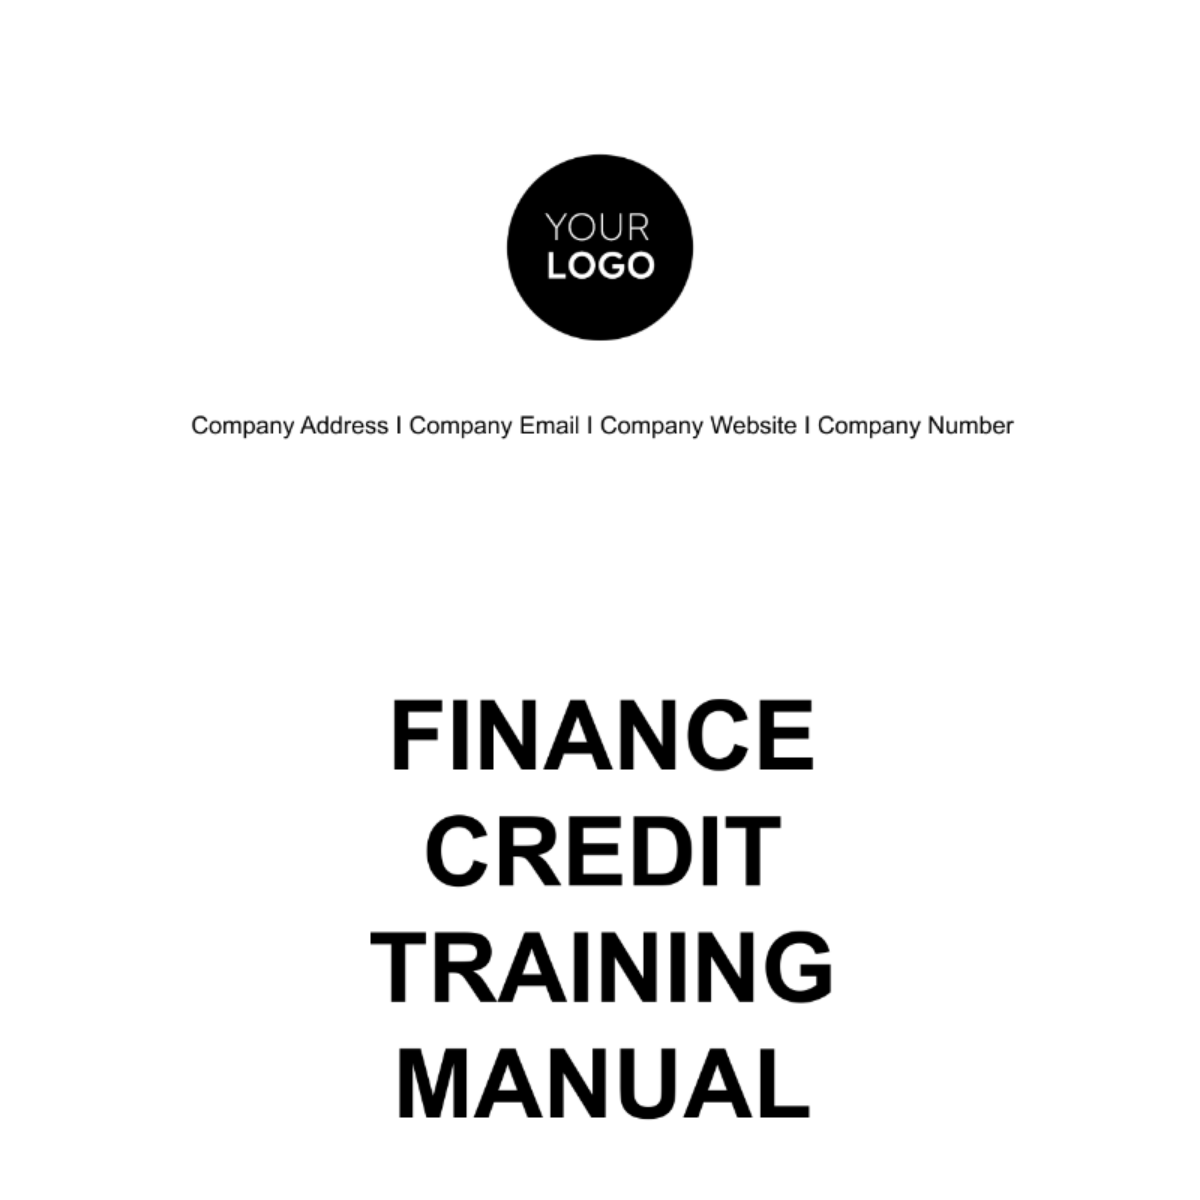 Finance Credit Training Manual Template